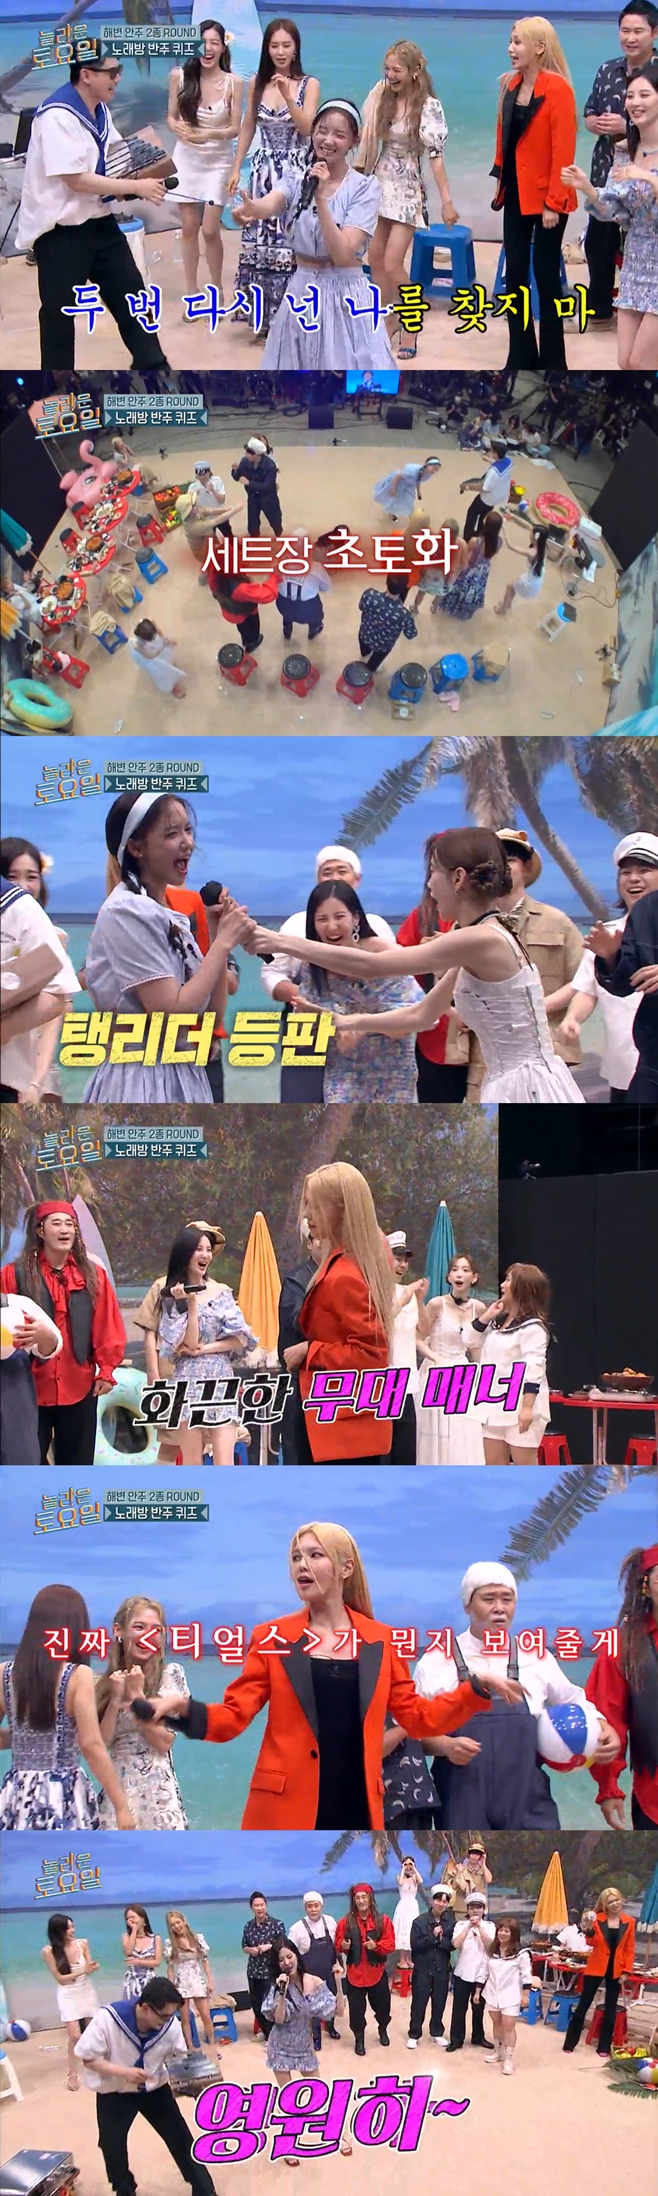 tvN 놀라운 토요일, 놀토, 소녀시대